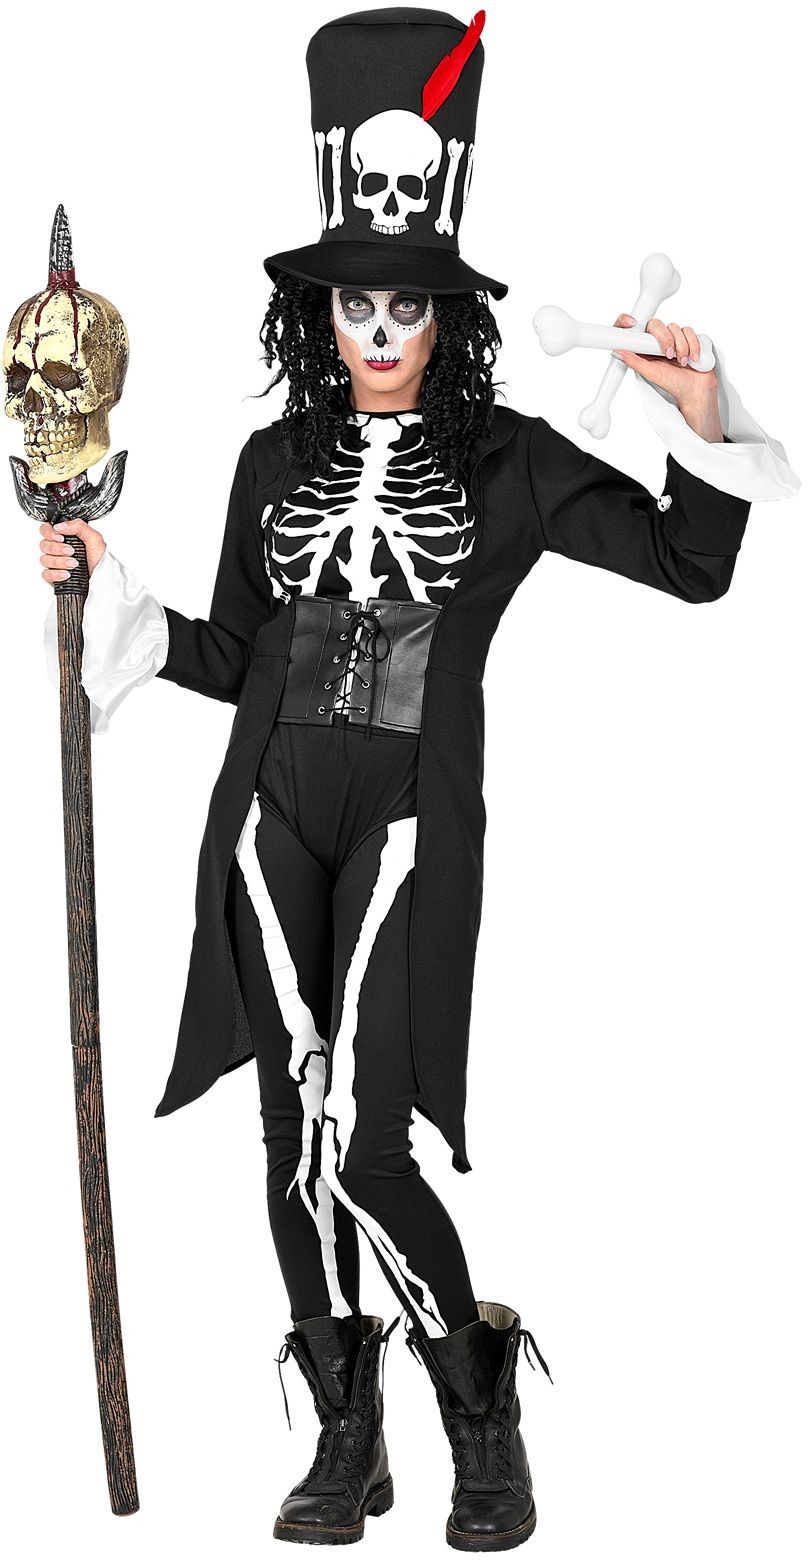 Skelet zwarte magie priester outfit dames